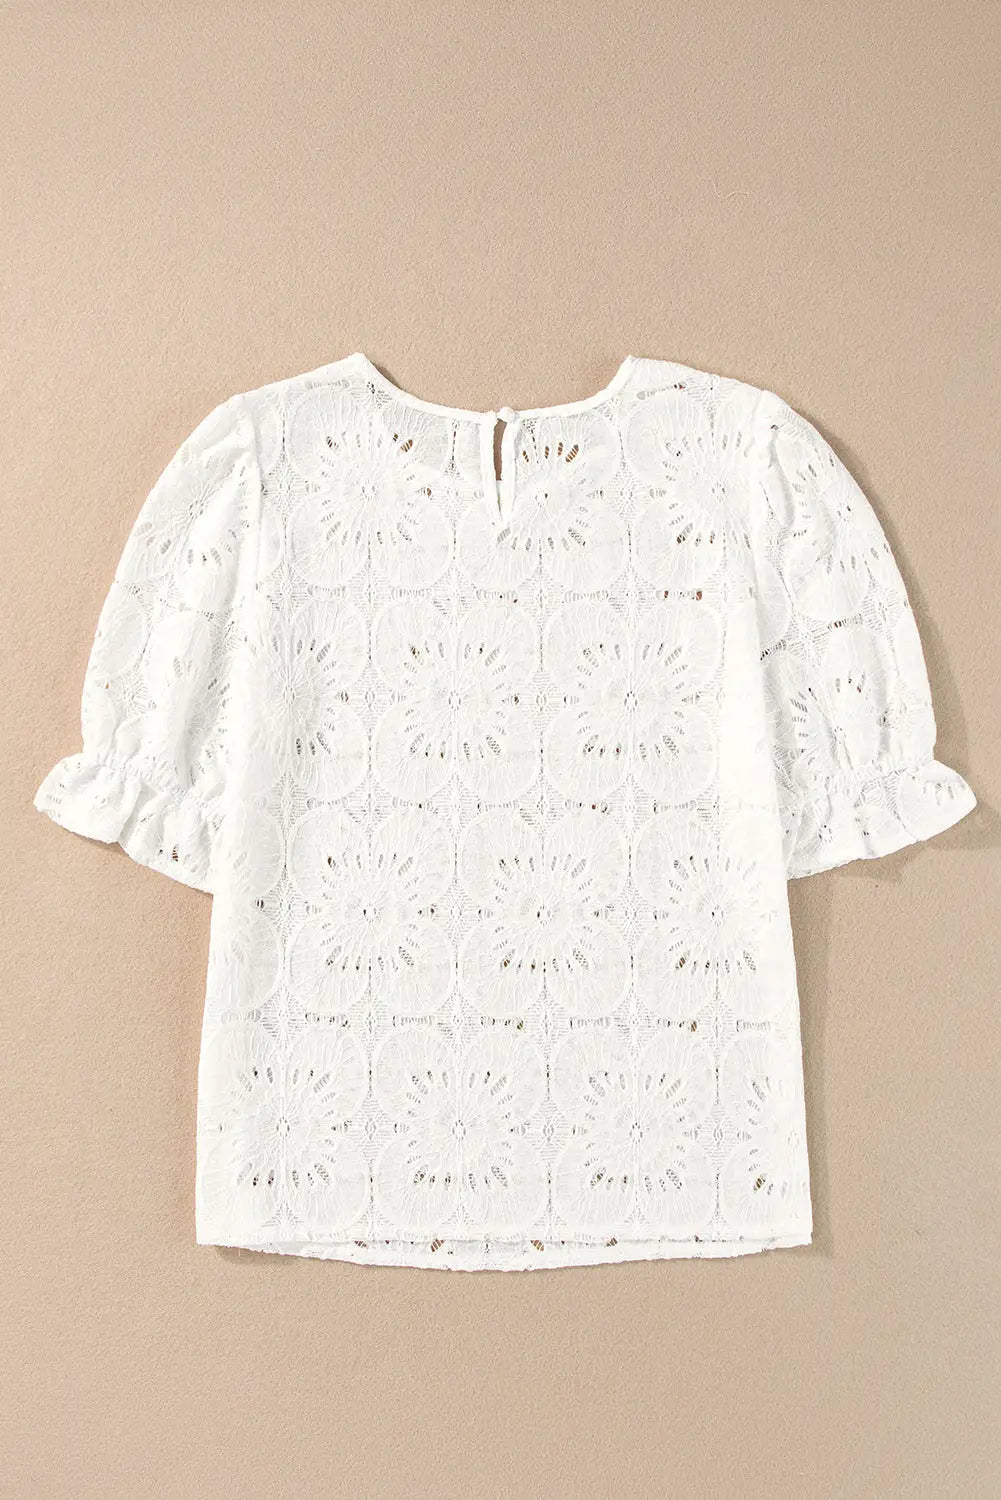 White flower eyelet jacquard top - tops/blouses & shirts